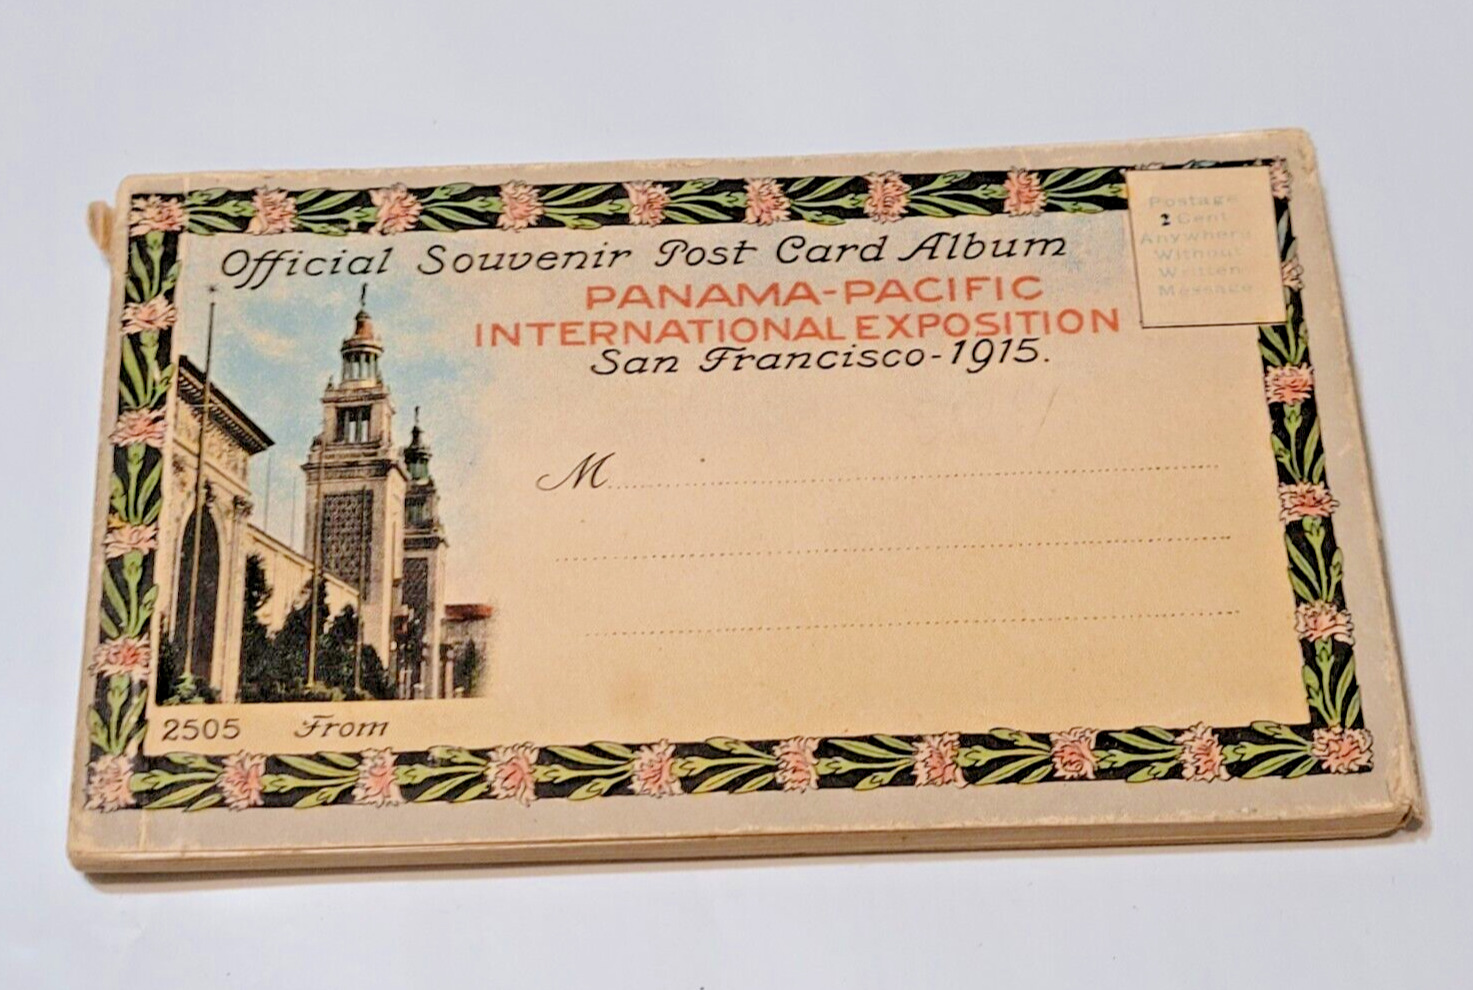 Complete Panama-Pacific International Expo Souvenir 20 Post Card Album No 2505